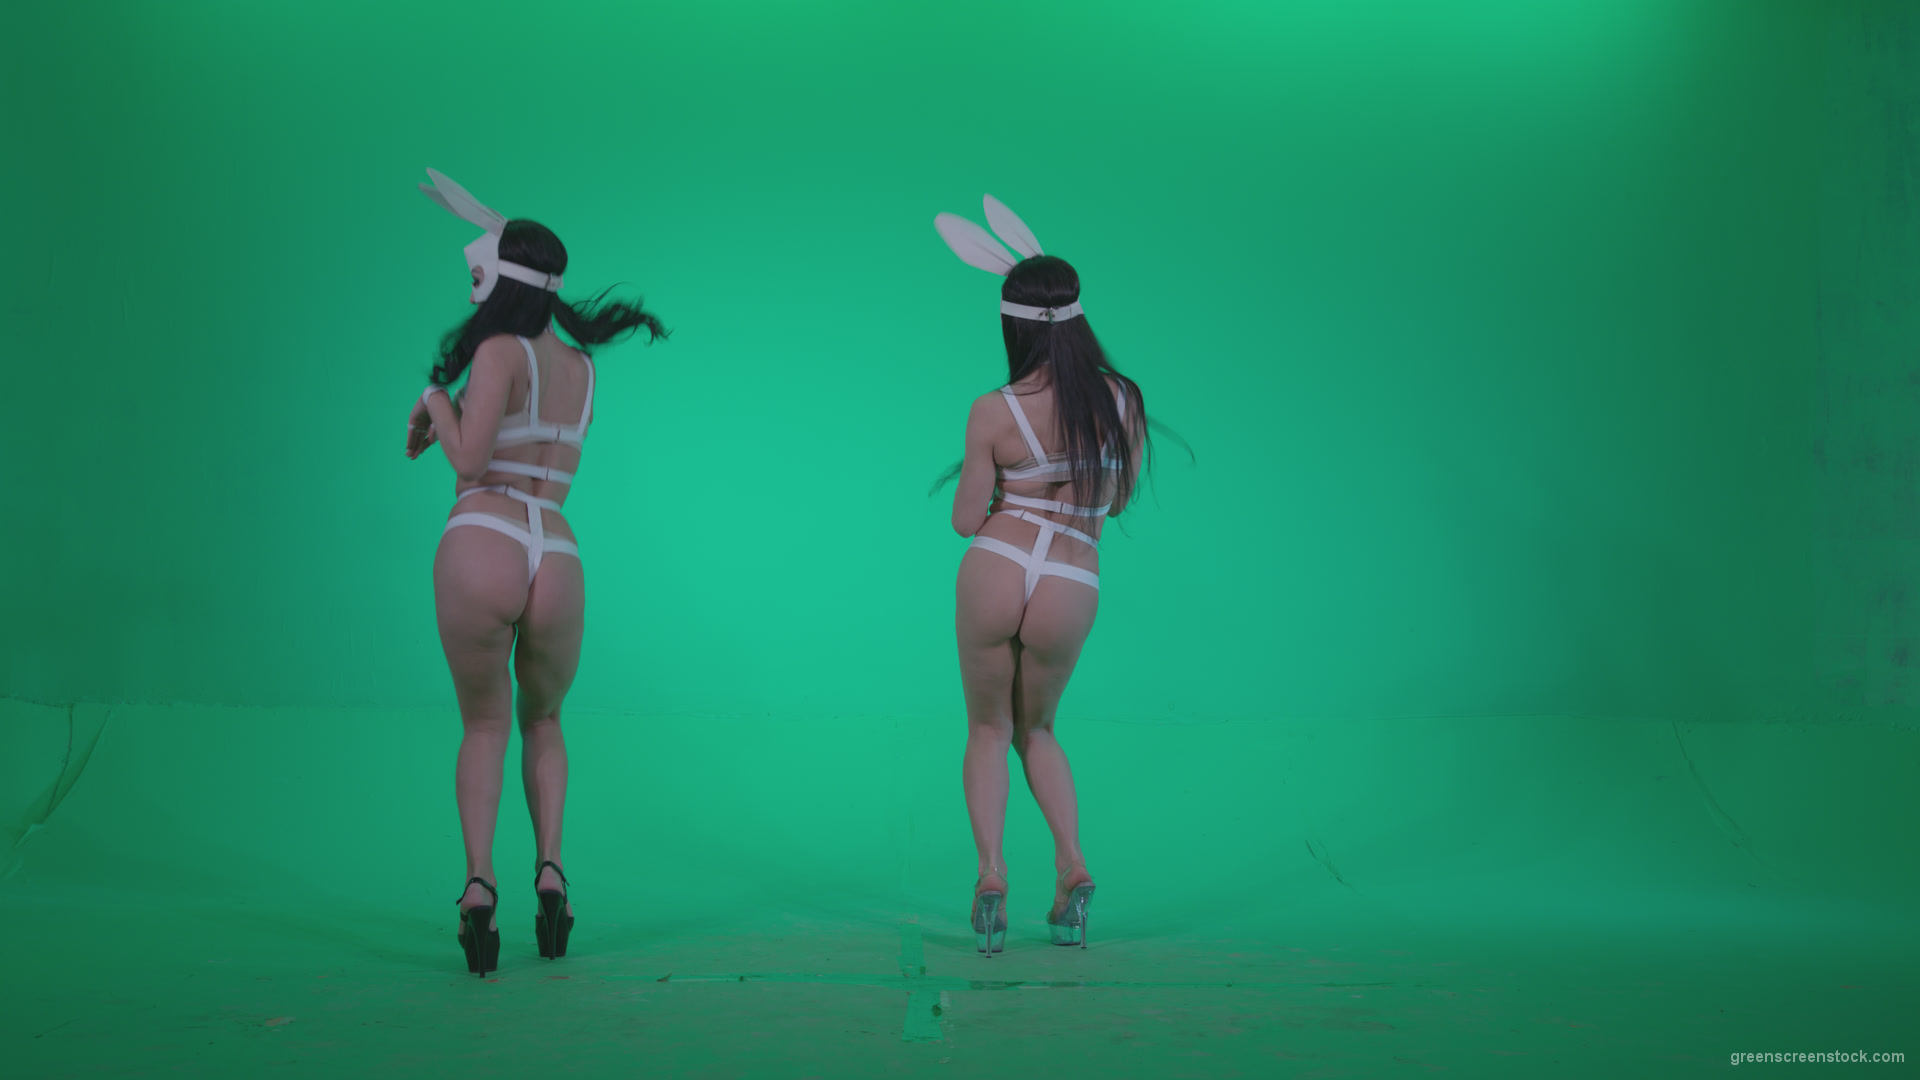 Go-go-Dancer-White-Rabbit-m2-Green-Screen-Video-Footage_006 Green Screen Stock